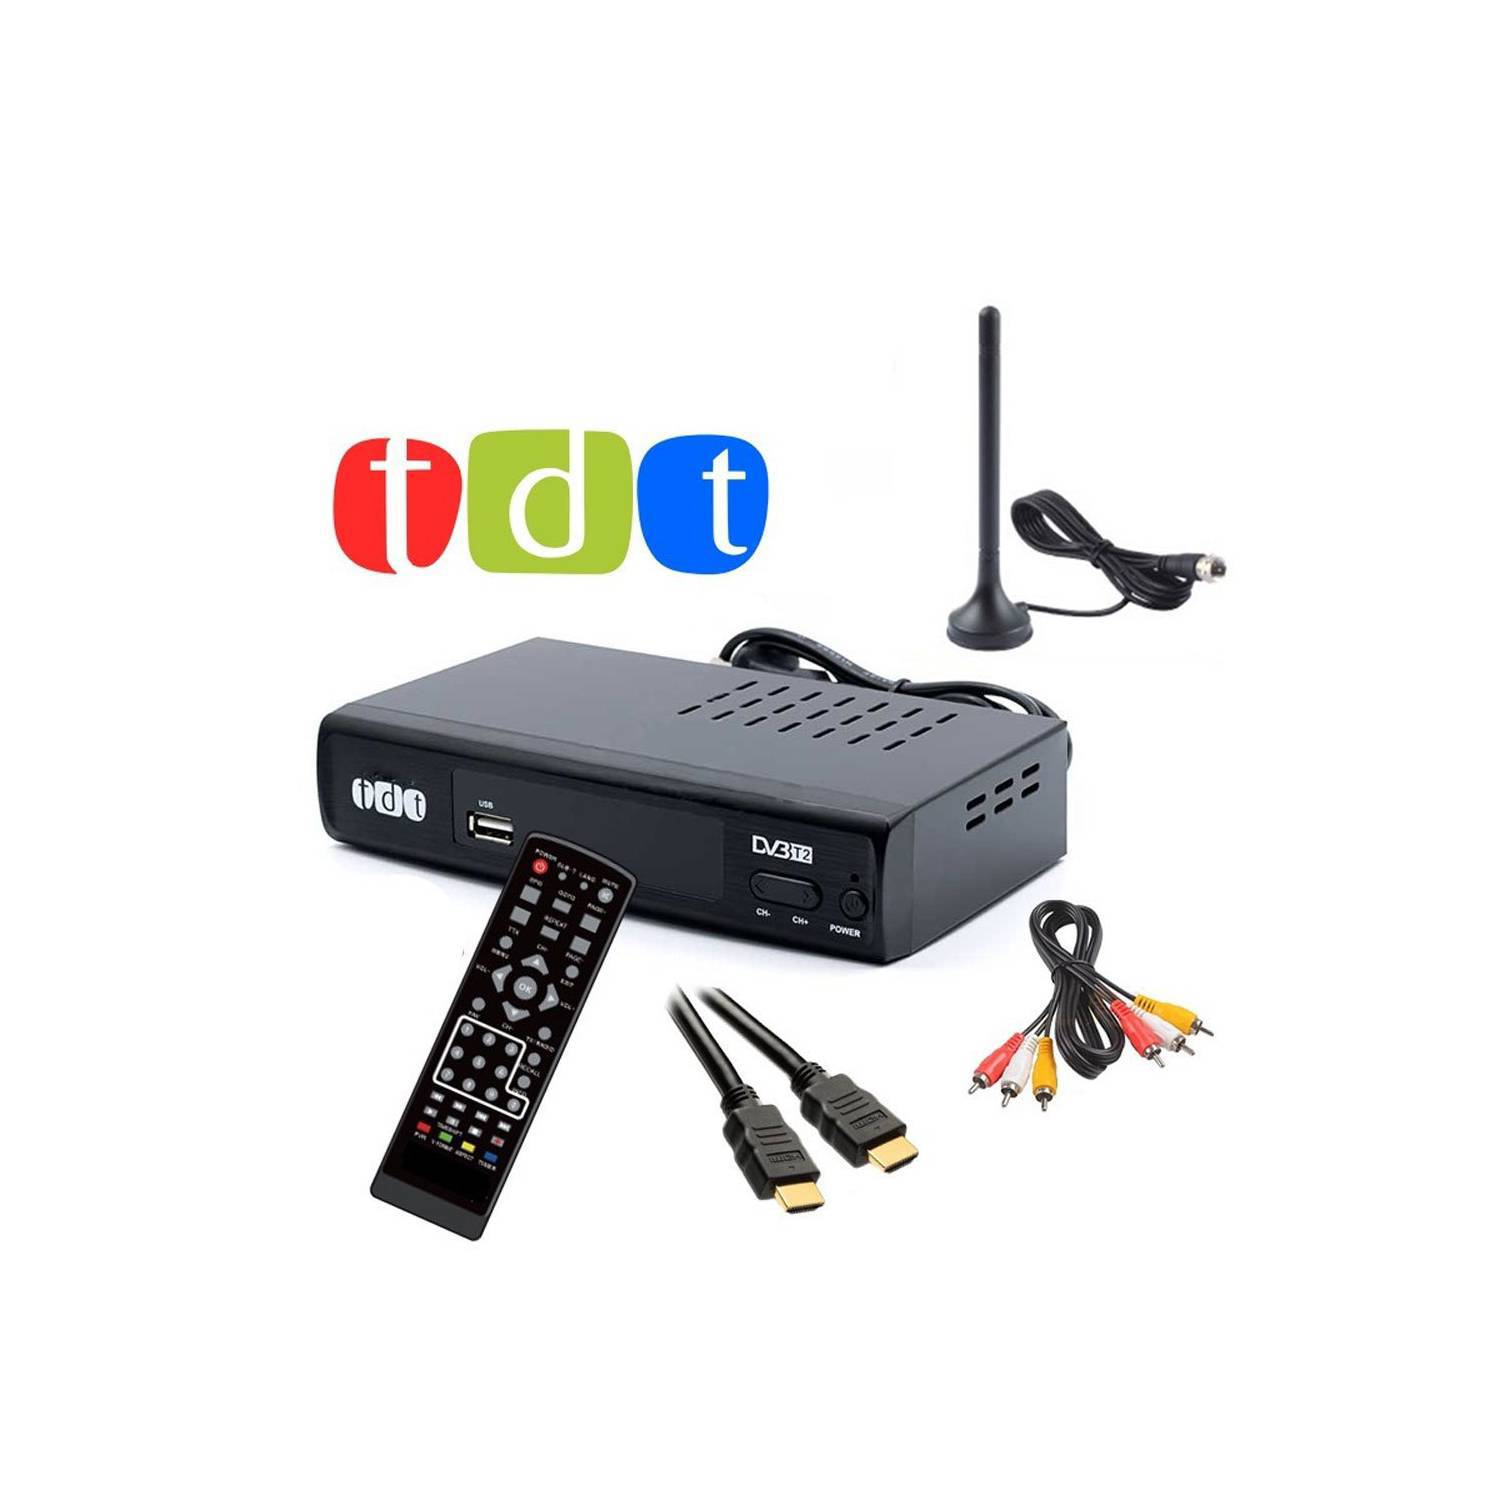 Decodificador Tdt Receptor Tv Digital Hd Control Hdmi